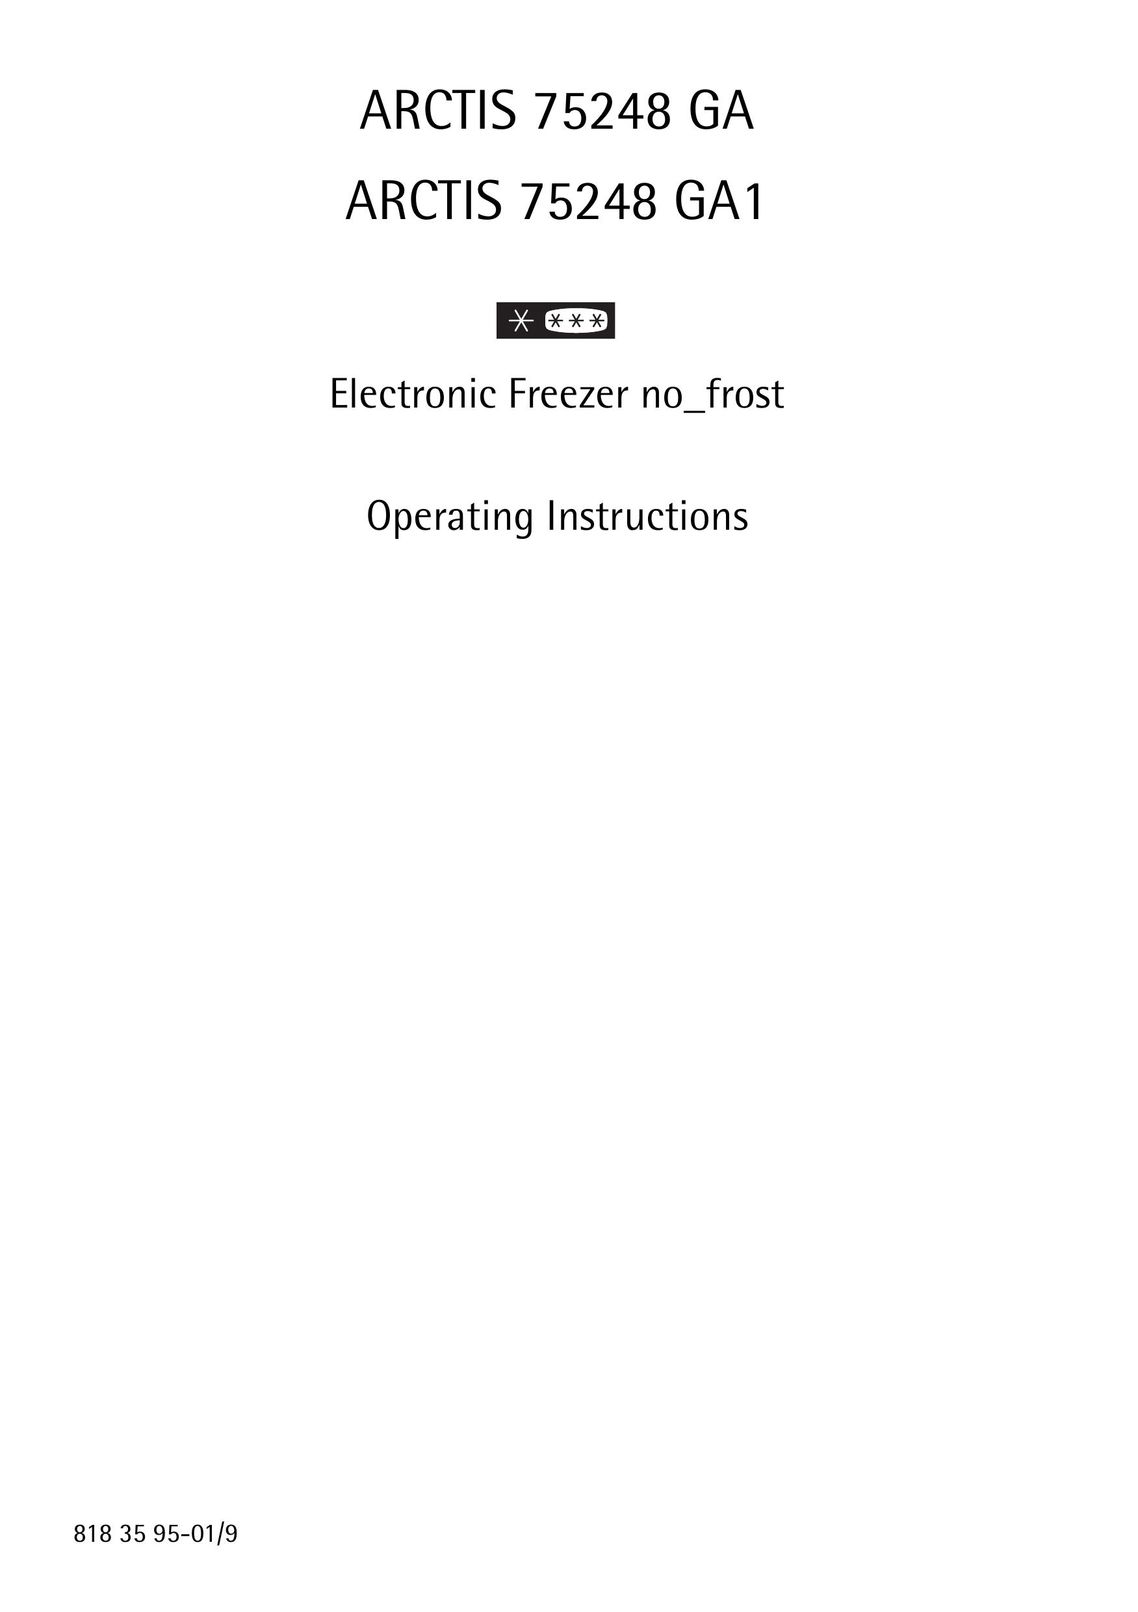 AEG 75248 GA1 Freezer User Manual